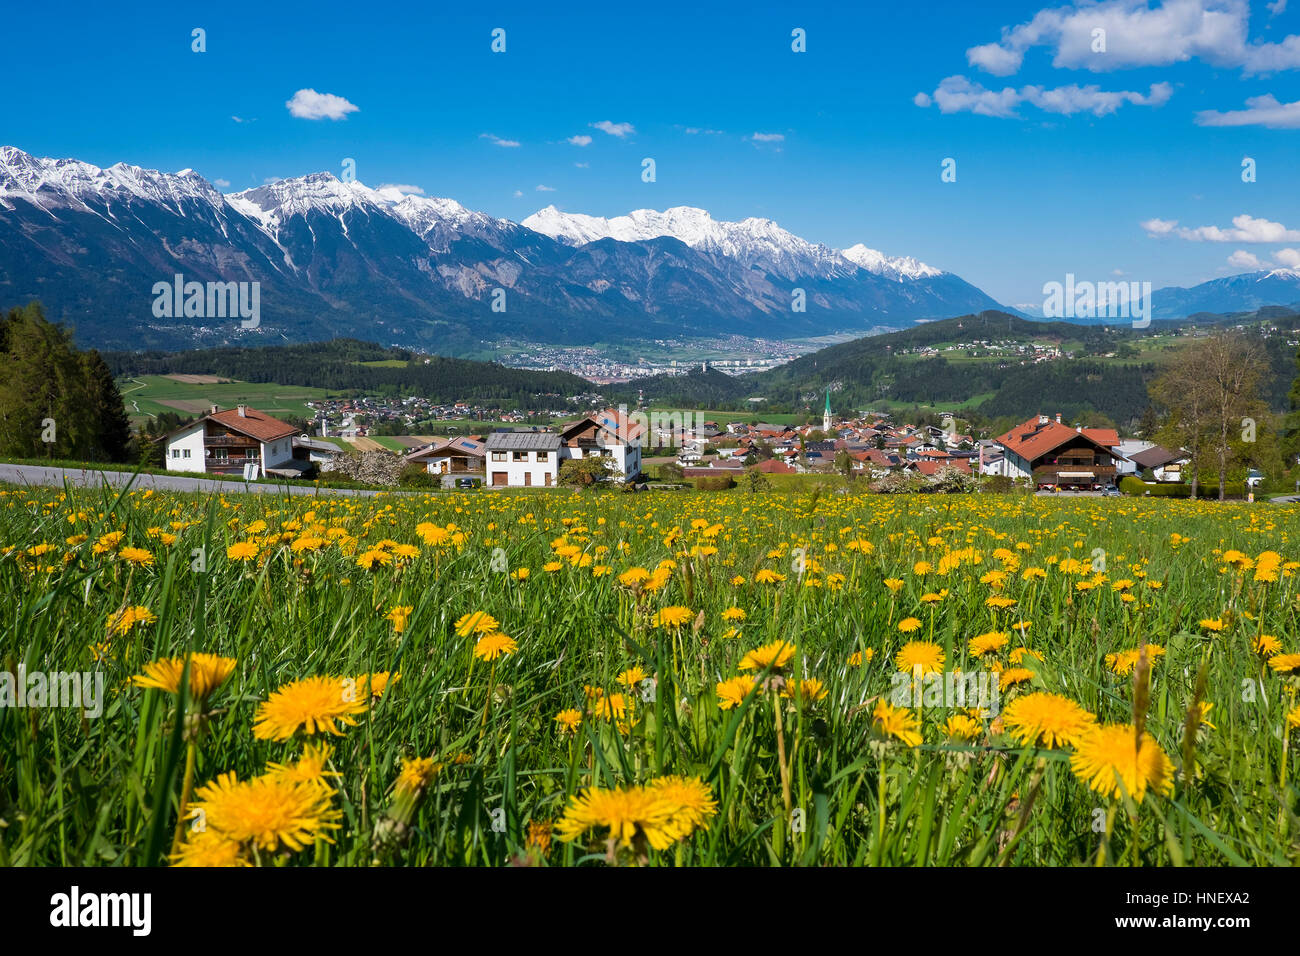 Village Mutters, dandelion field in front, Innsbruck in back, Inn Valley, mountains Nordkette with snow, Alps, Tyrol, Austria Stock Photo